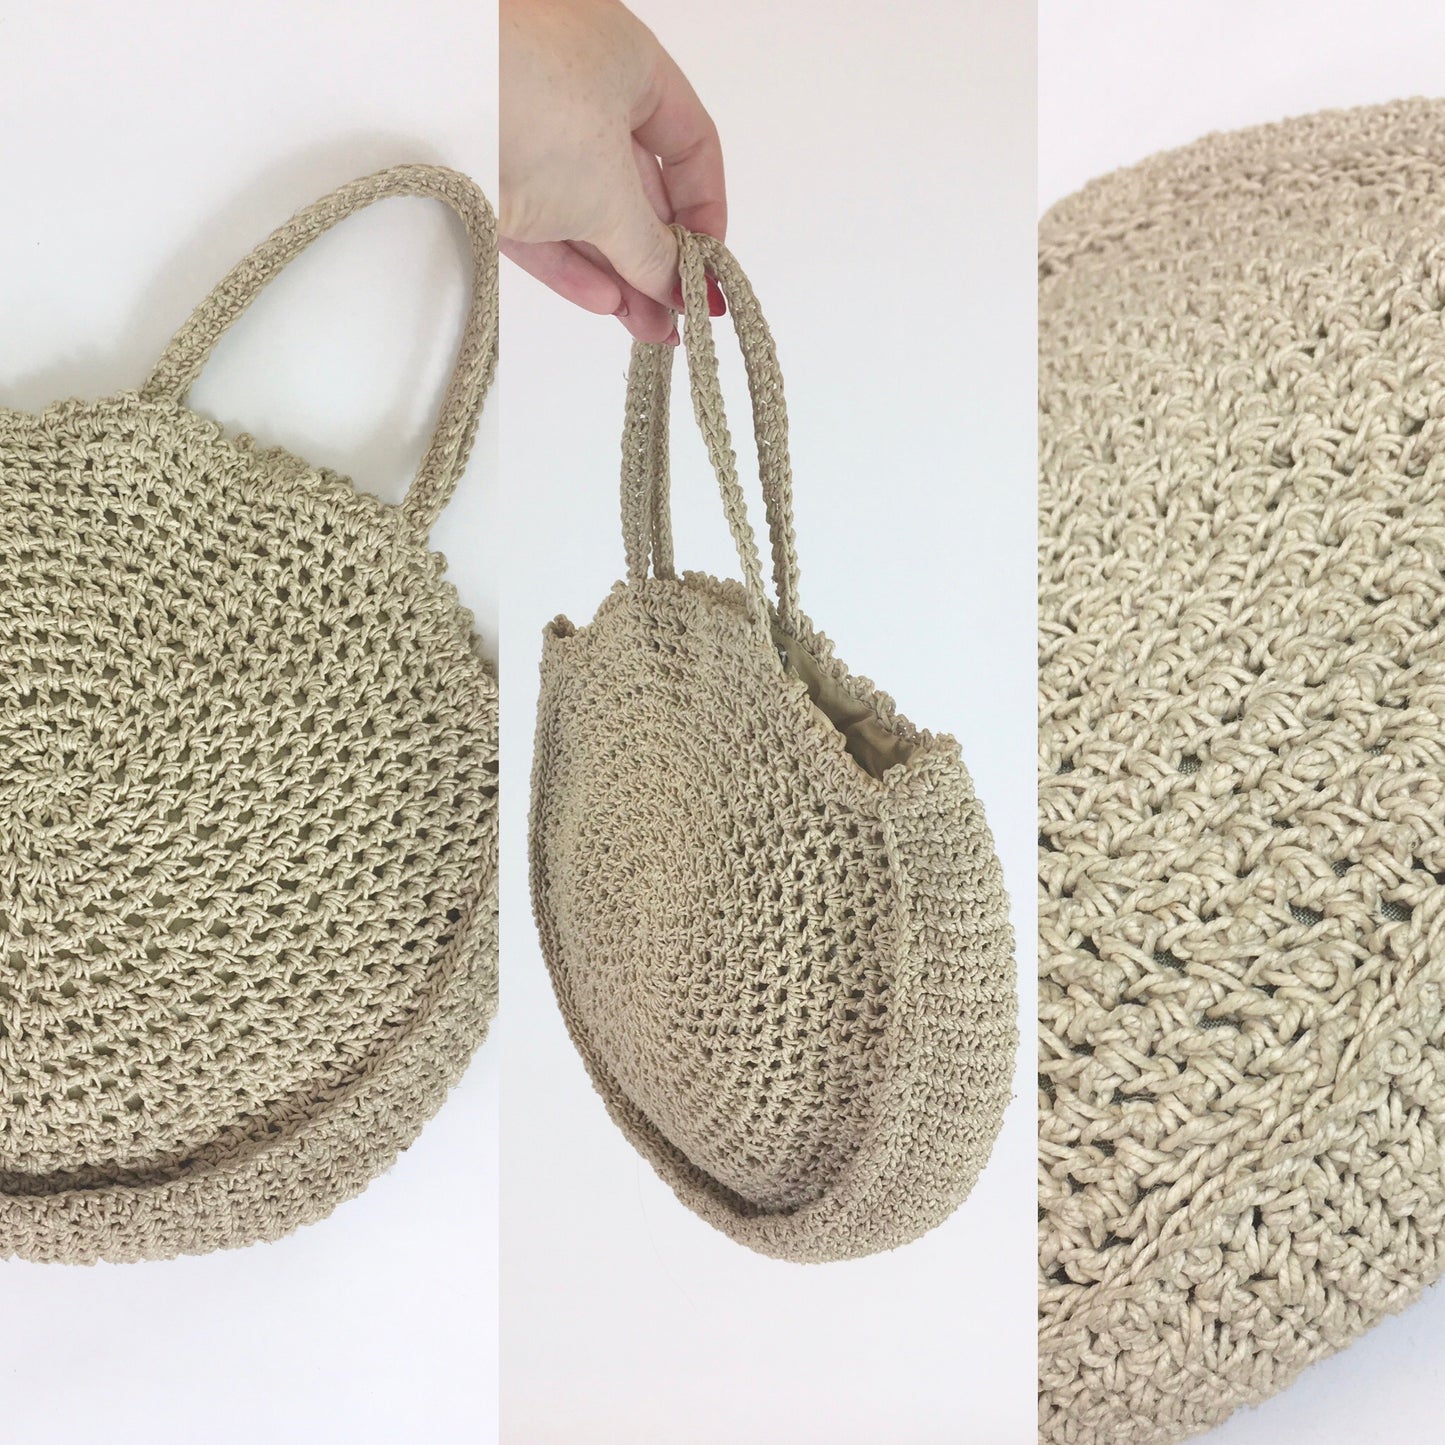 Original 1940’s Wartime Crochet Circular Handbag - In Soft Cream